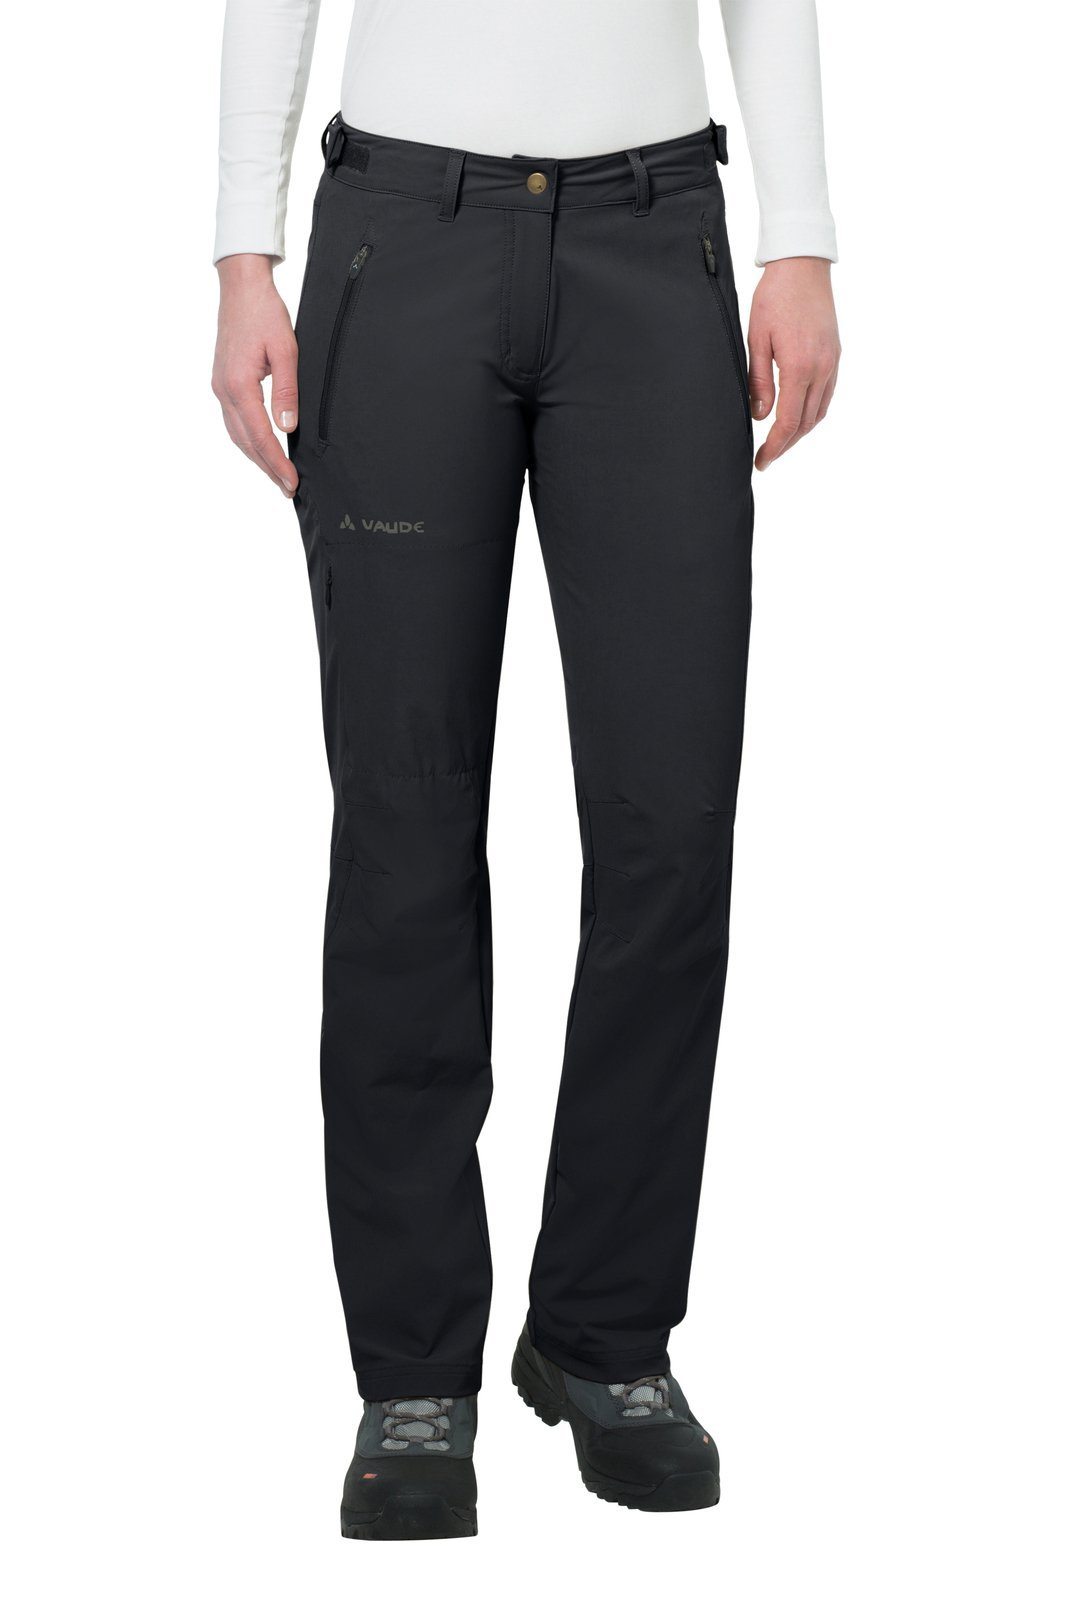 Vaude - W's Farley Stretch Pants II - bluesign® certified materials - Weekendbee - sustainable sportswear